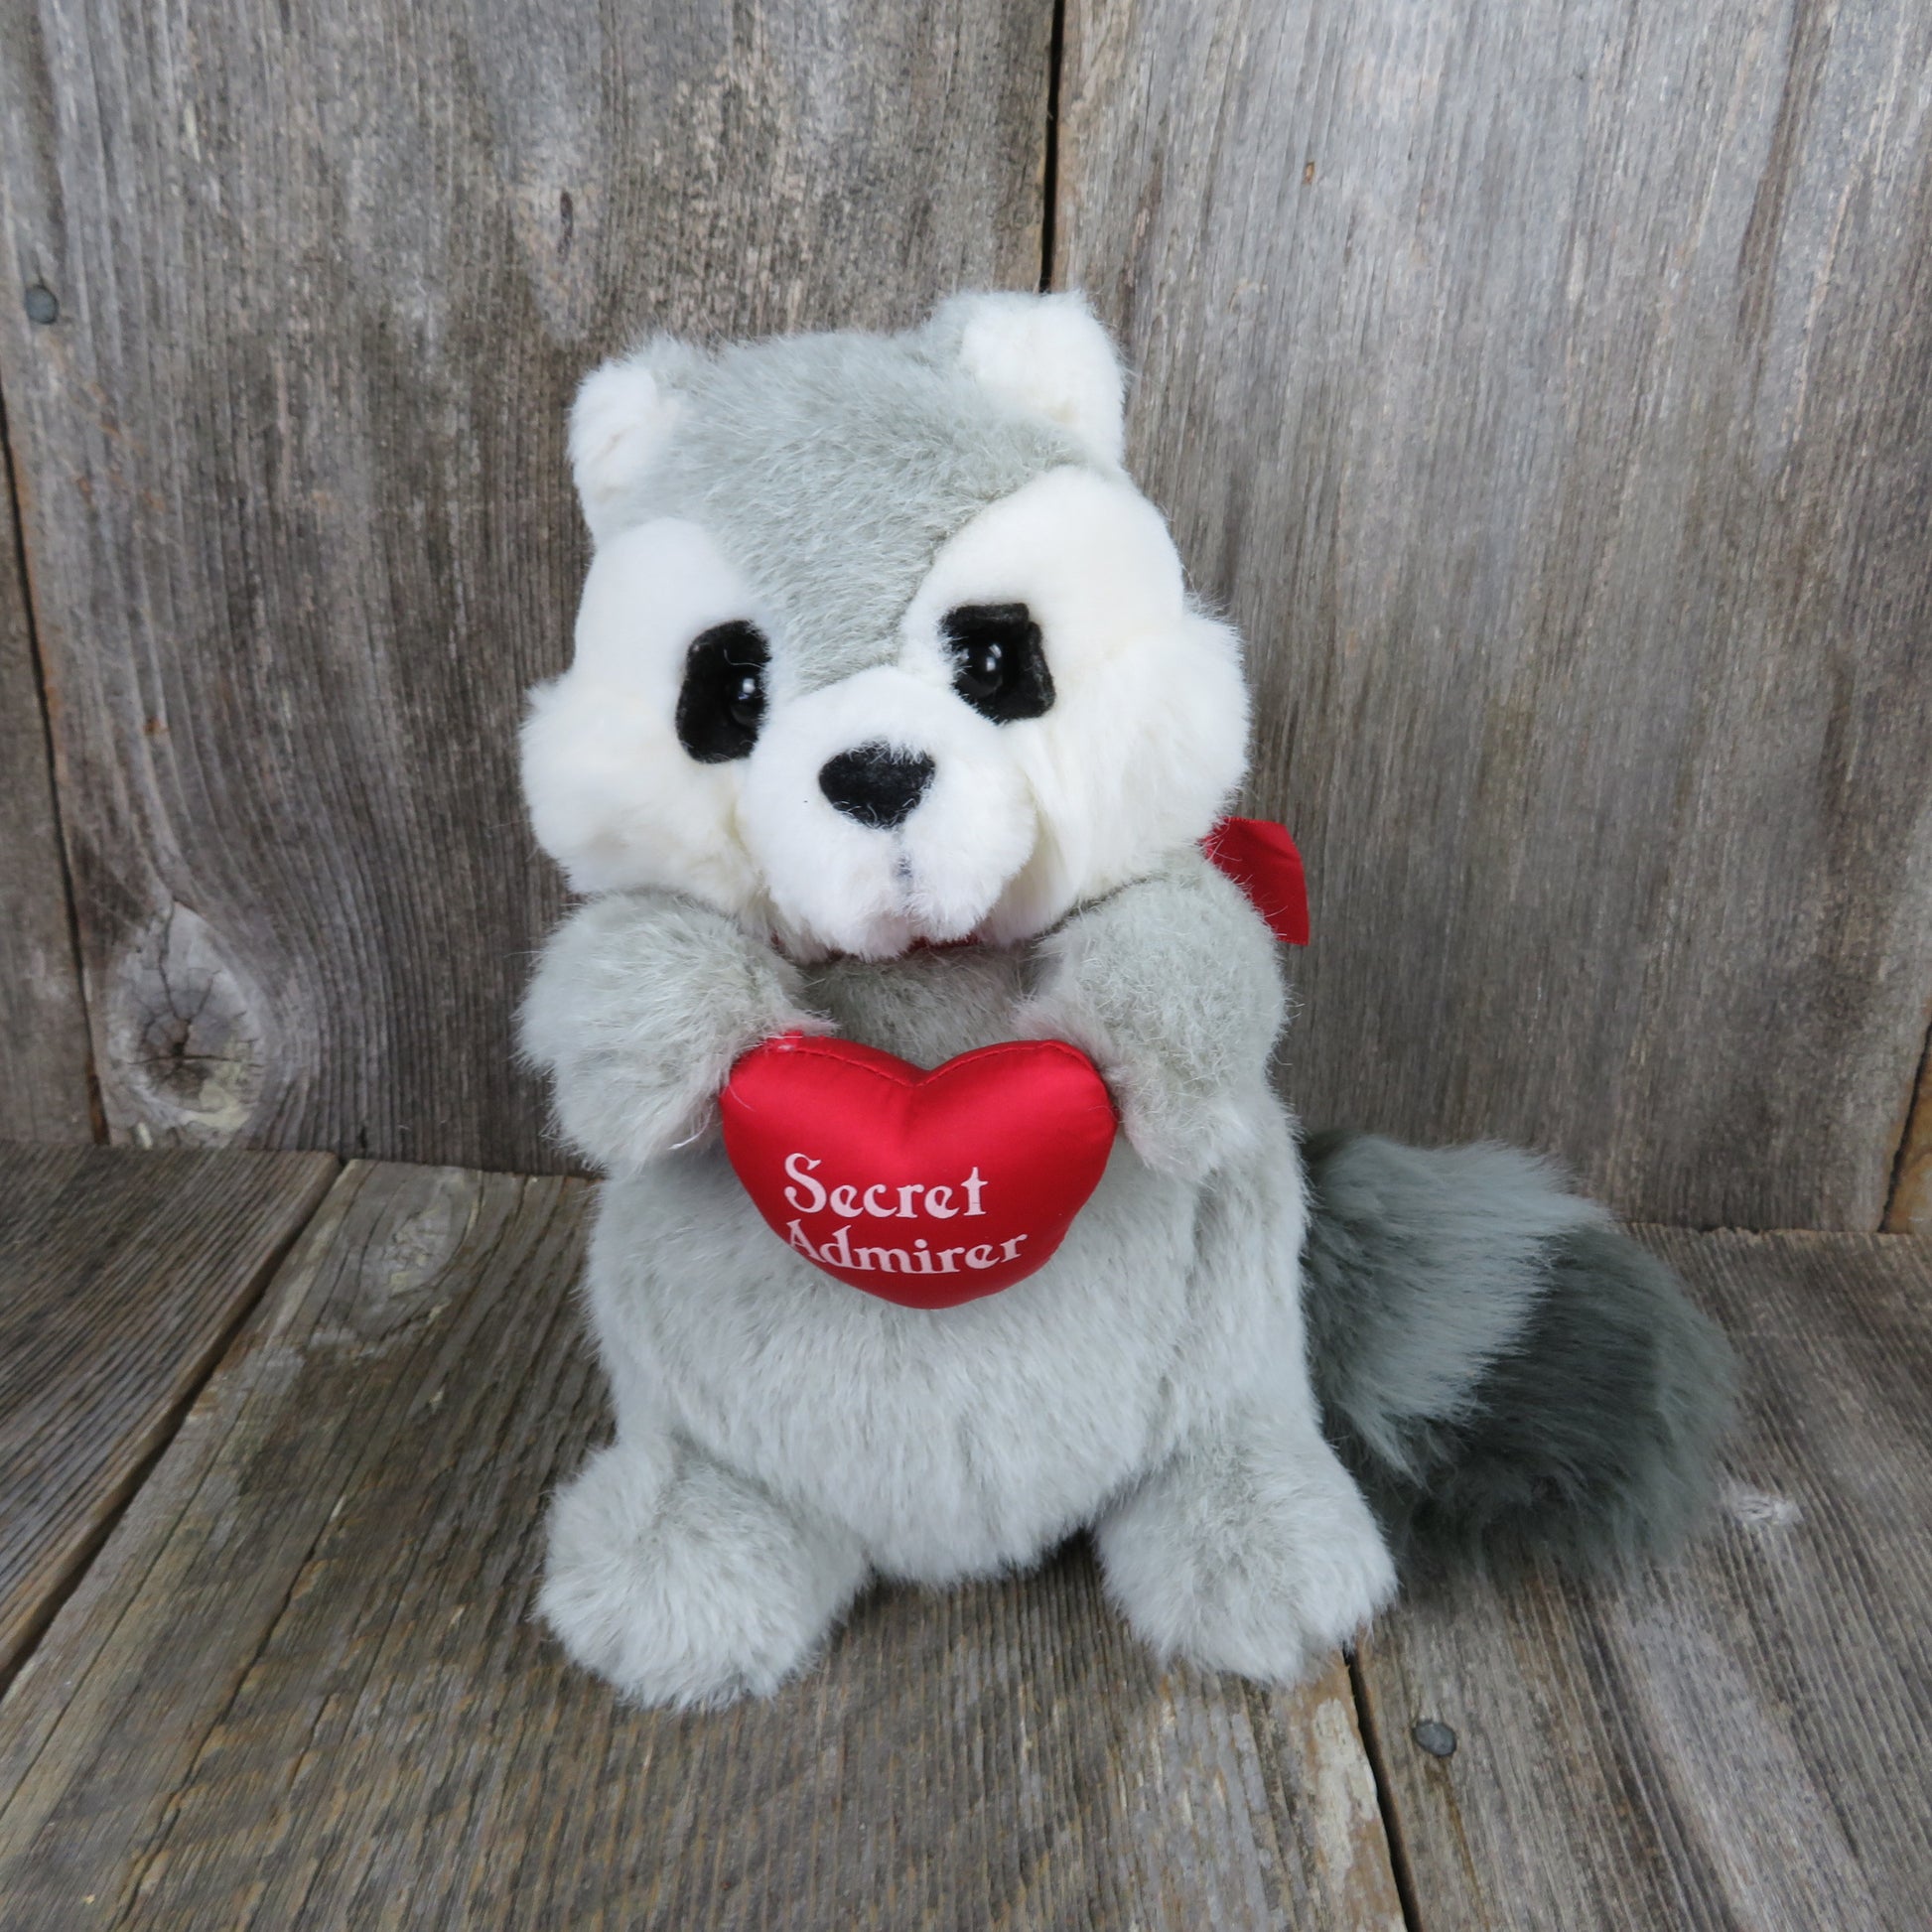 Vintage Raccoon Plush Valentines Heart Secret Admirer Stuffed Animal Gray by Dakin 1994 Grey Black - At Grandma's Table